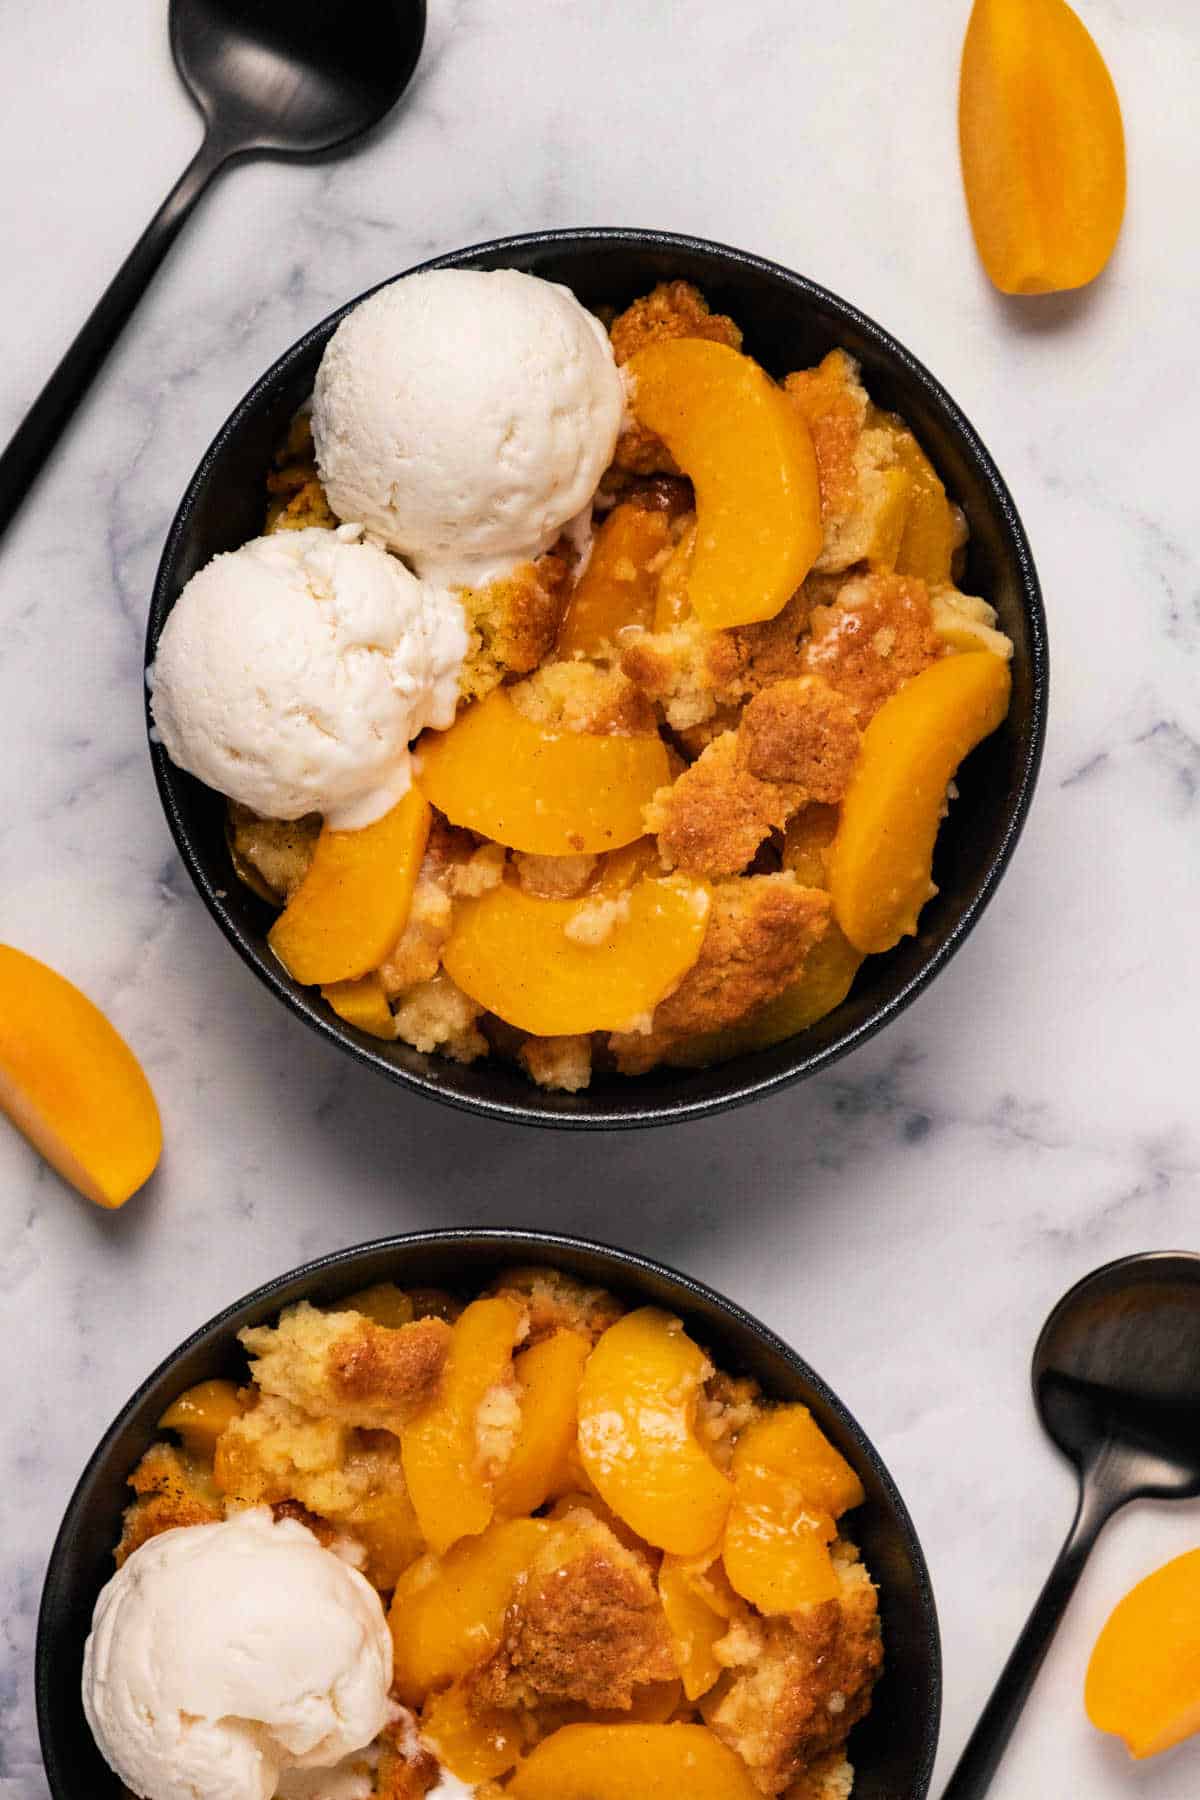 Peach cobbler in a black bowl with ice cream. 